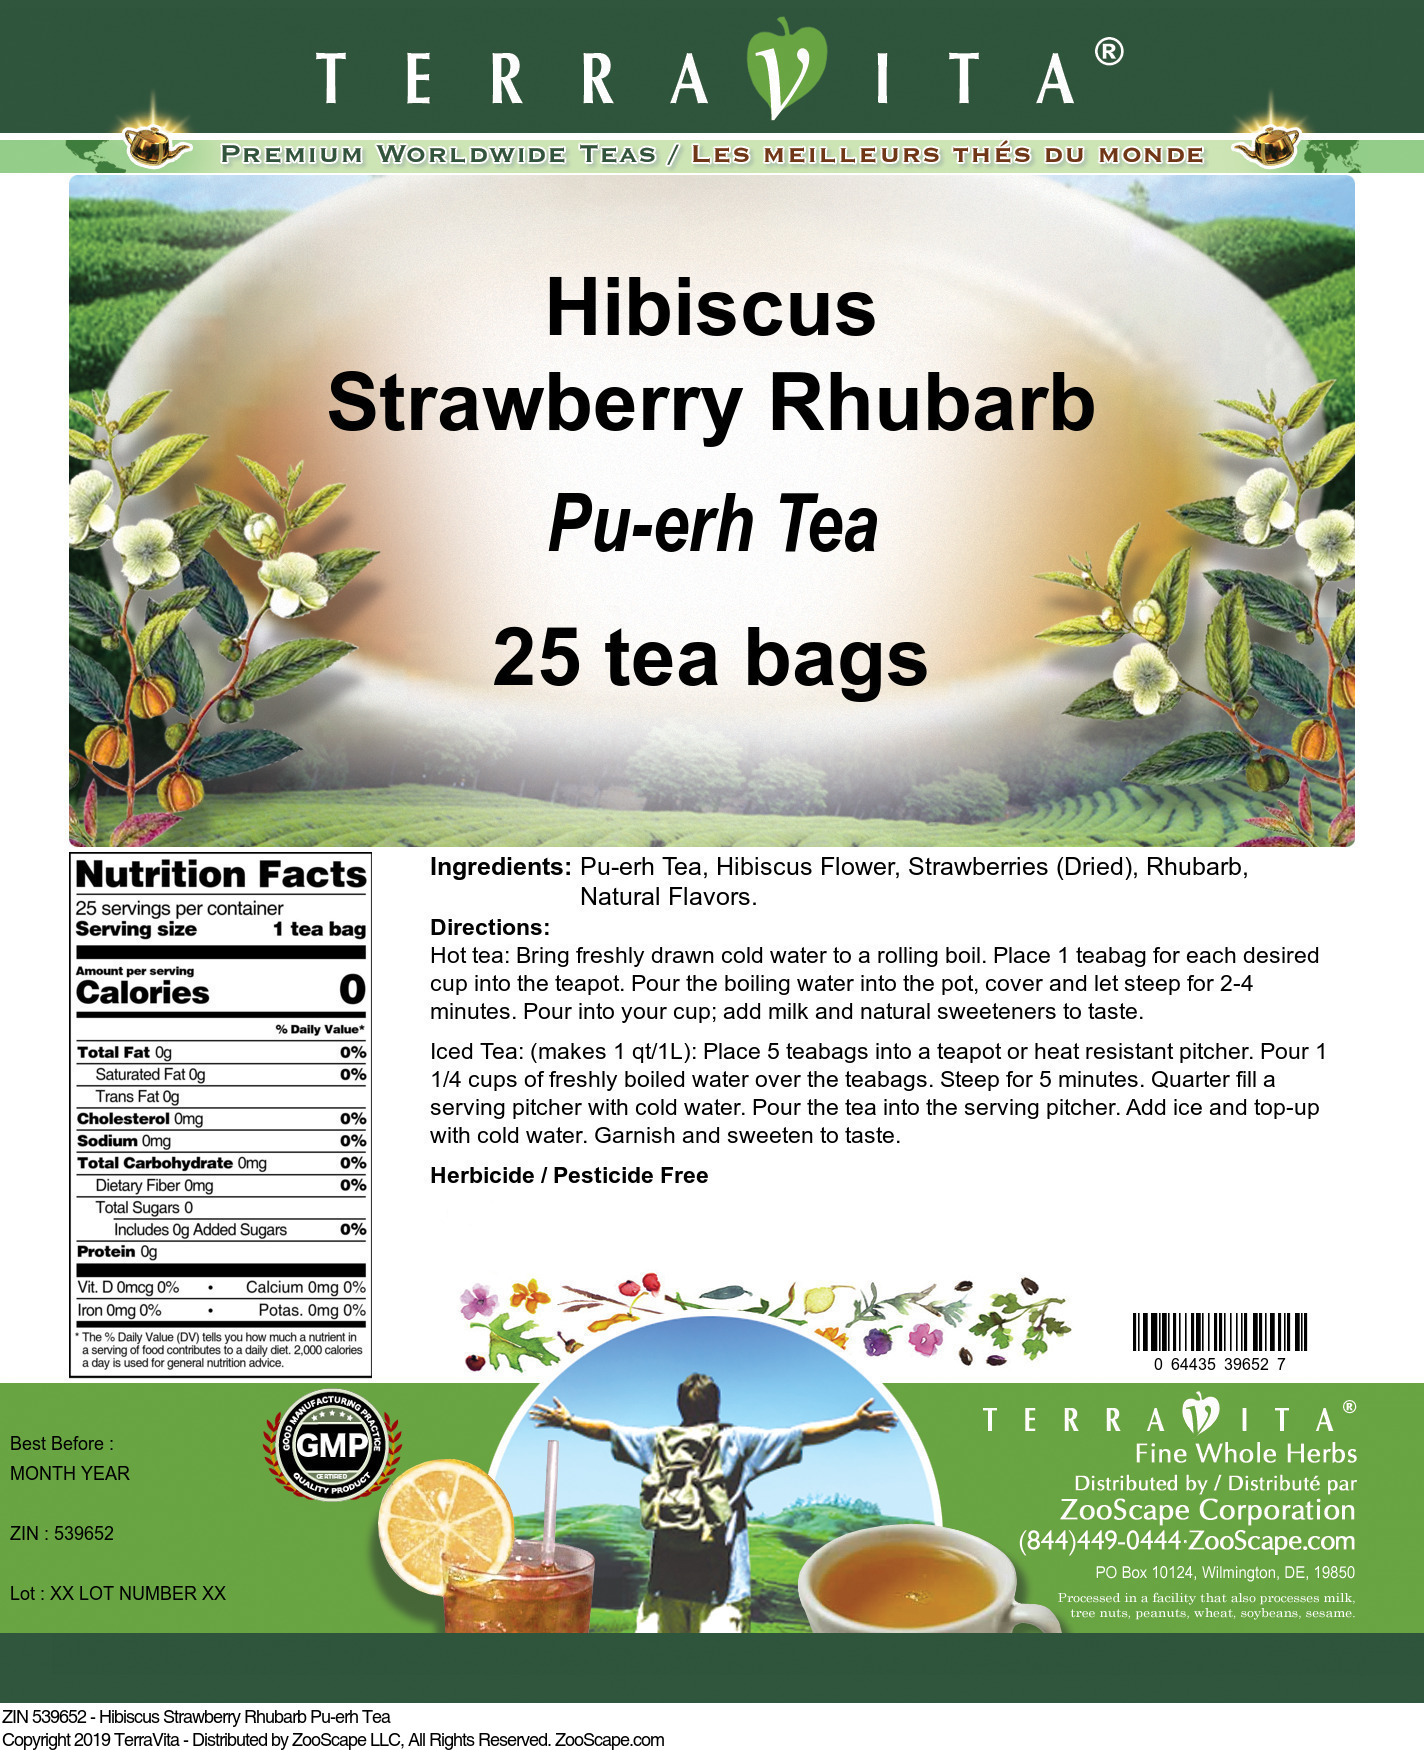 Hibiscus Strawberry Rhubarb Pu-erh Tea - Label